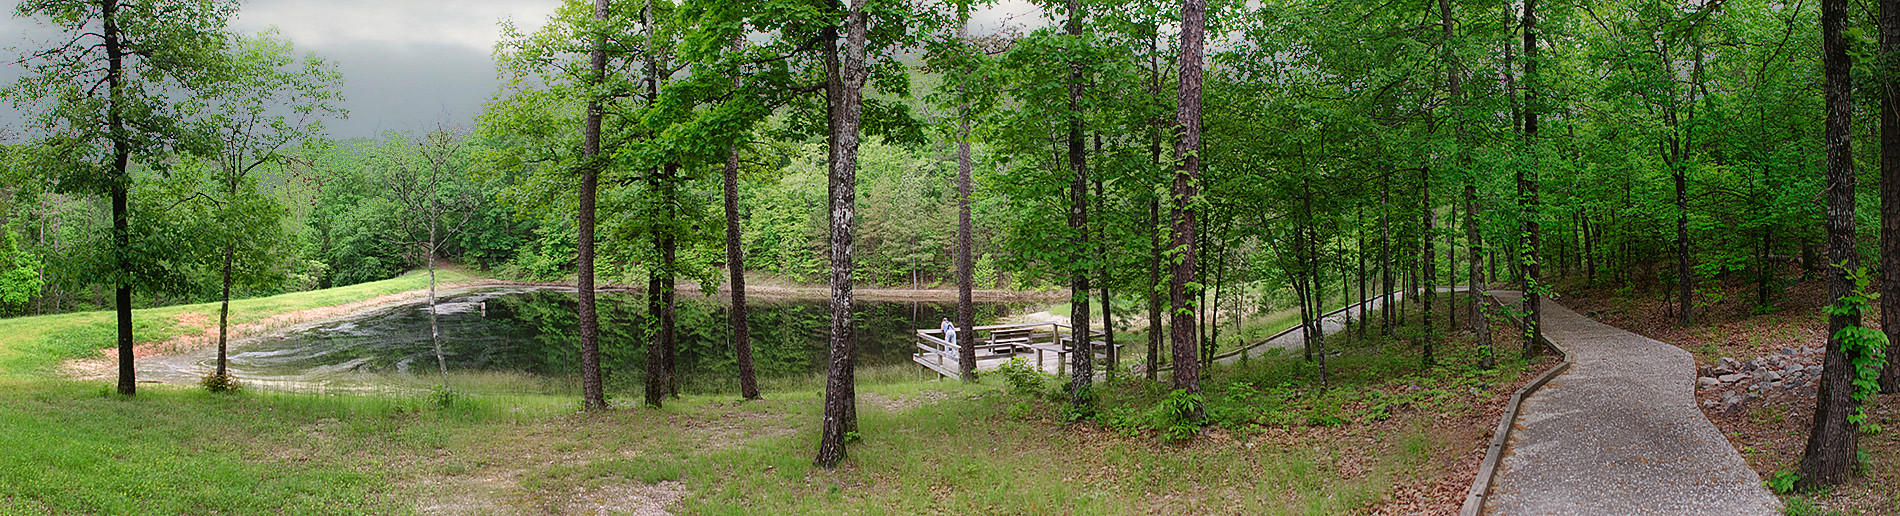 Friendship Pond – May 2013